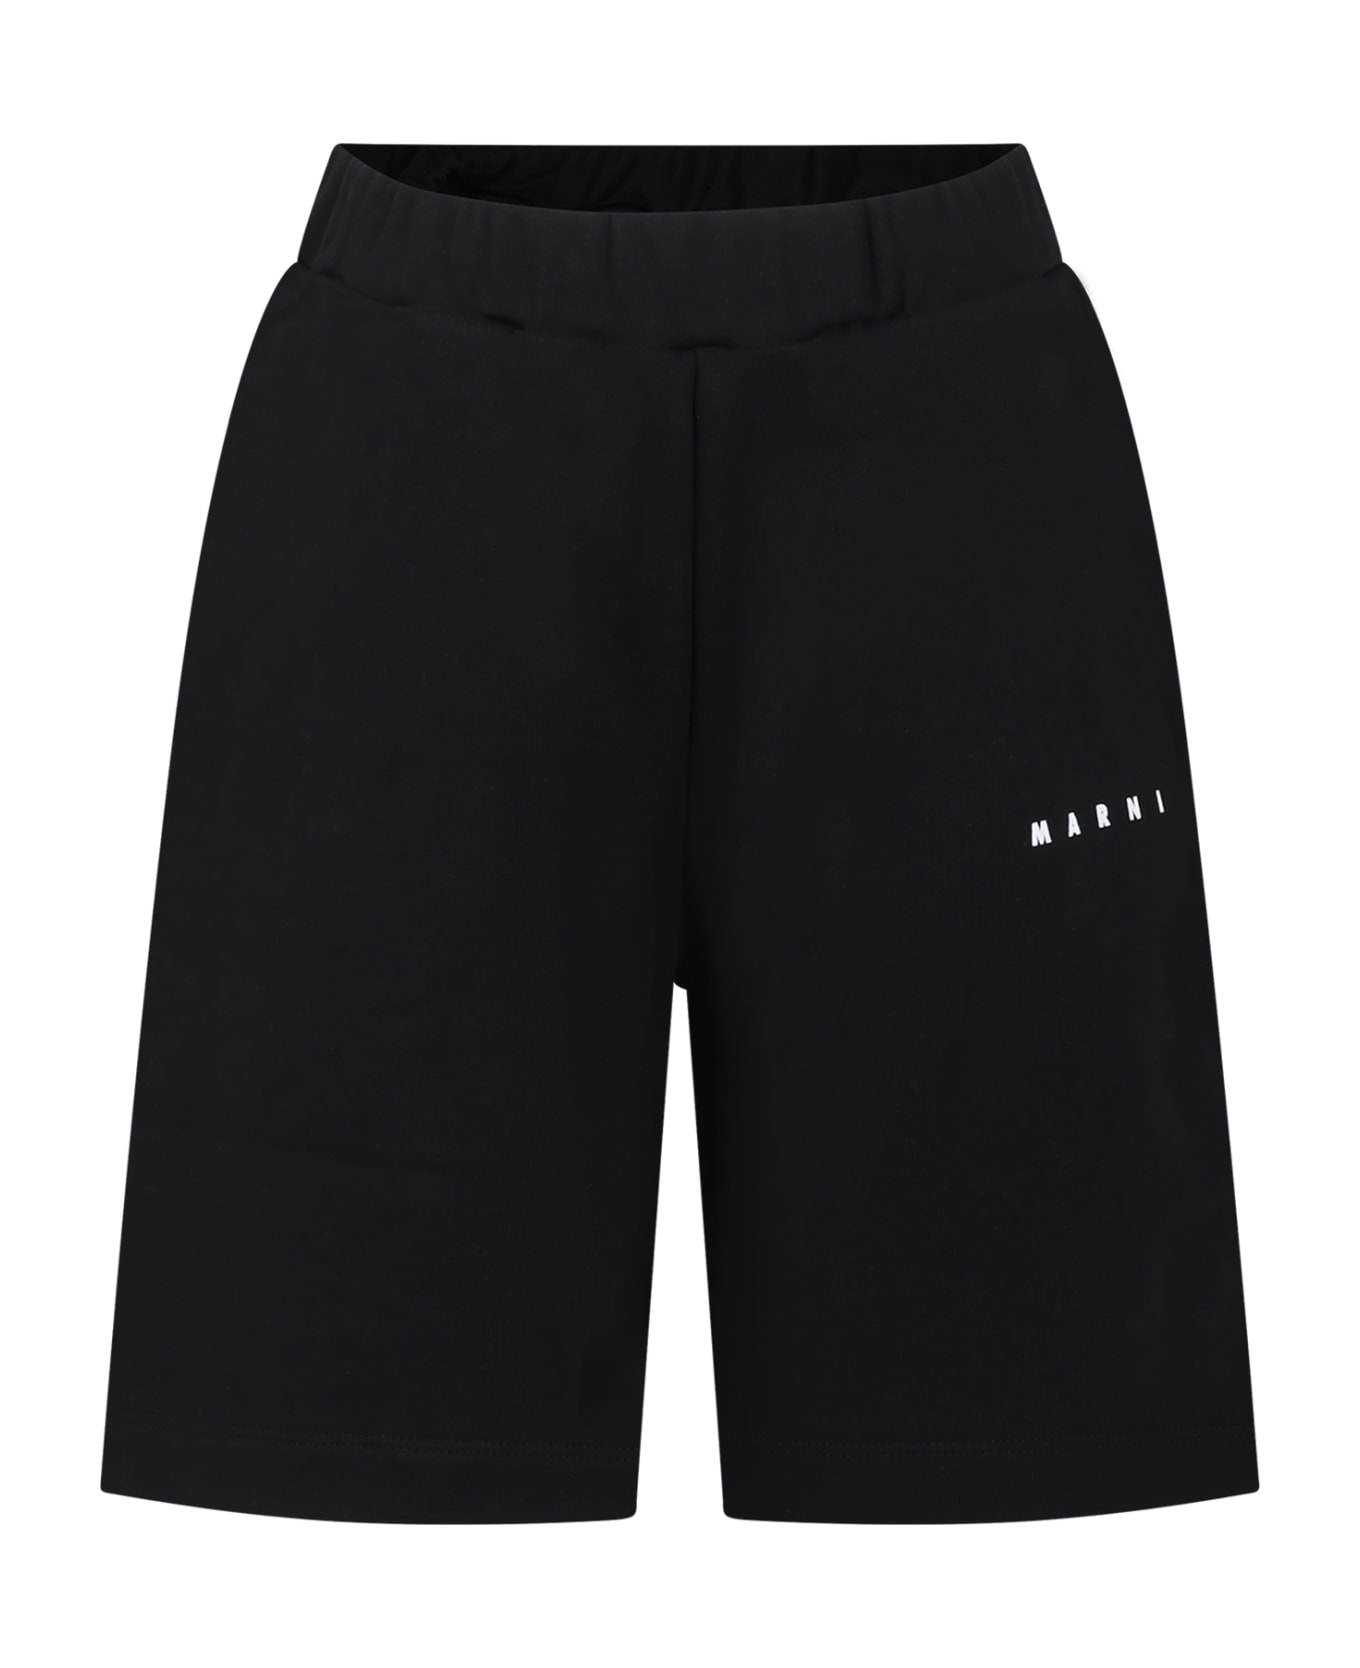 Marni Black Shorts For Kids With Logo - Black ボトムス